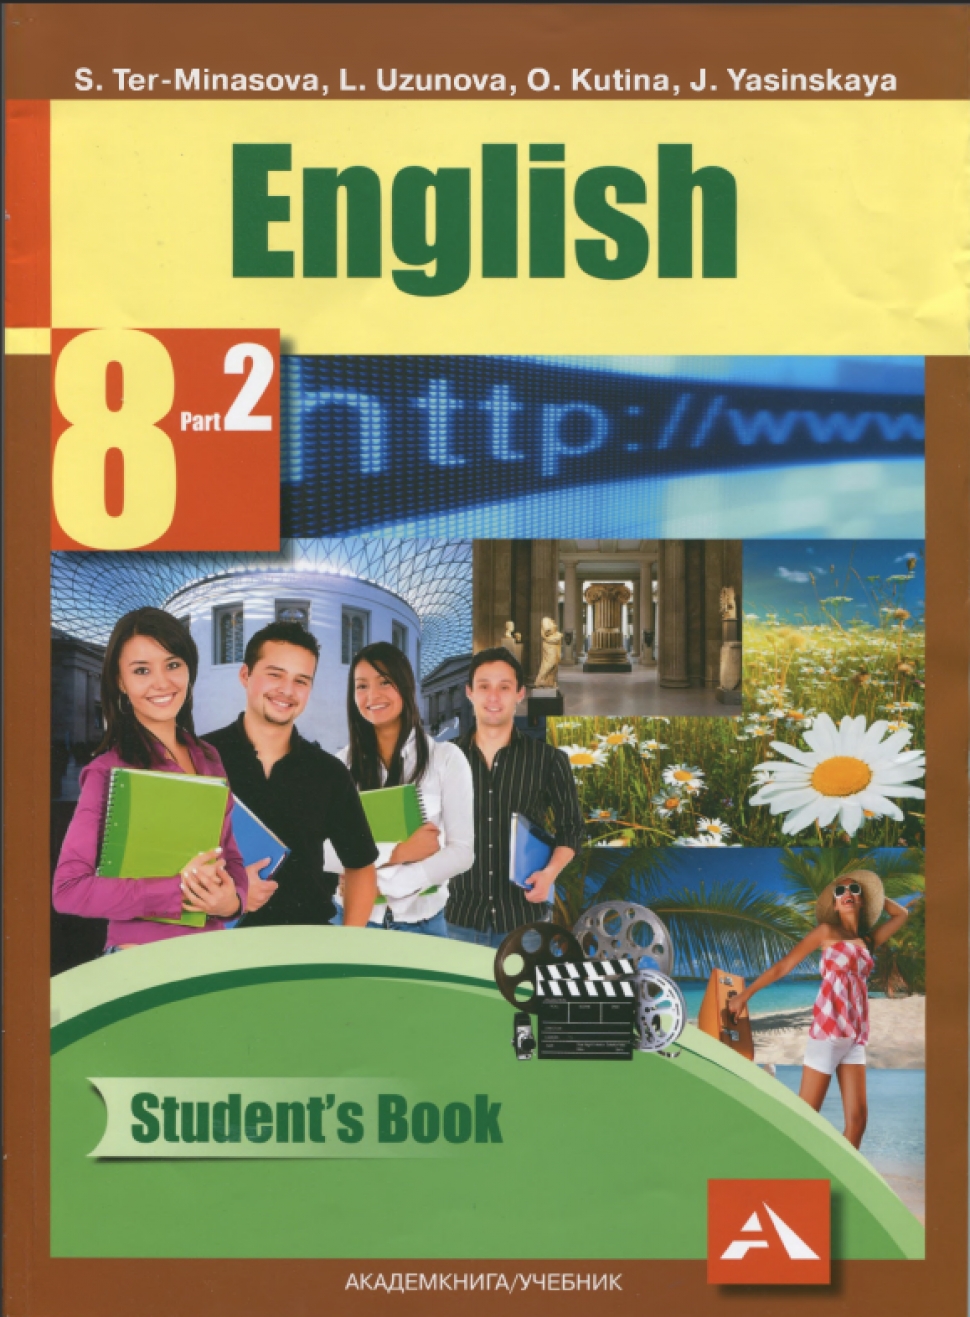 Английский язык 8 класс. С тер Минасова 8 класс английский. Учебник английского 8 класс. English 8 класс учебник. Английский students book.